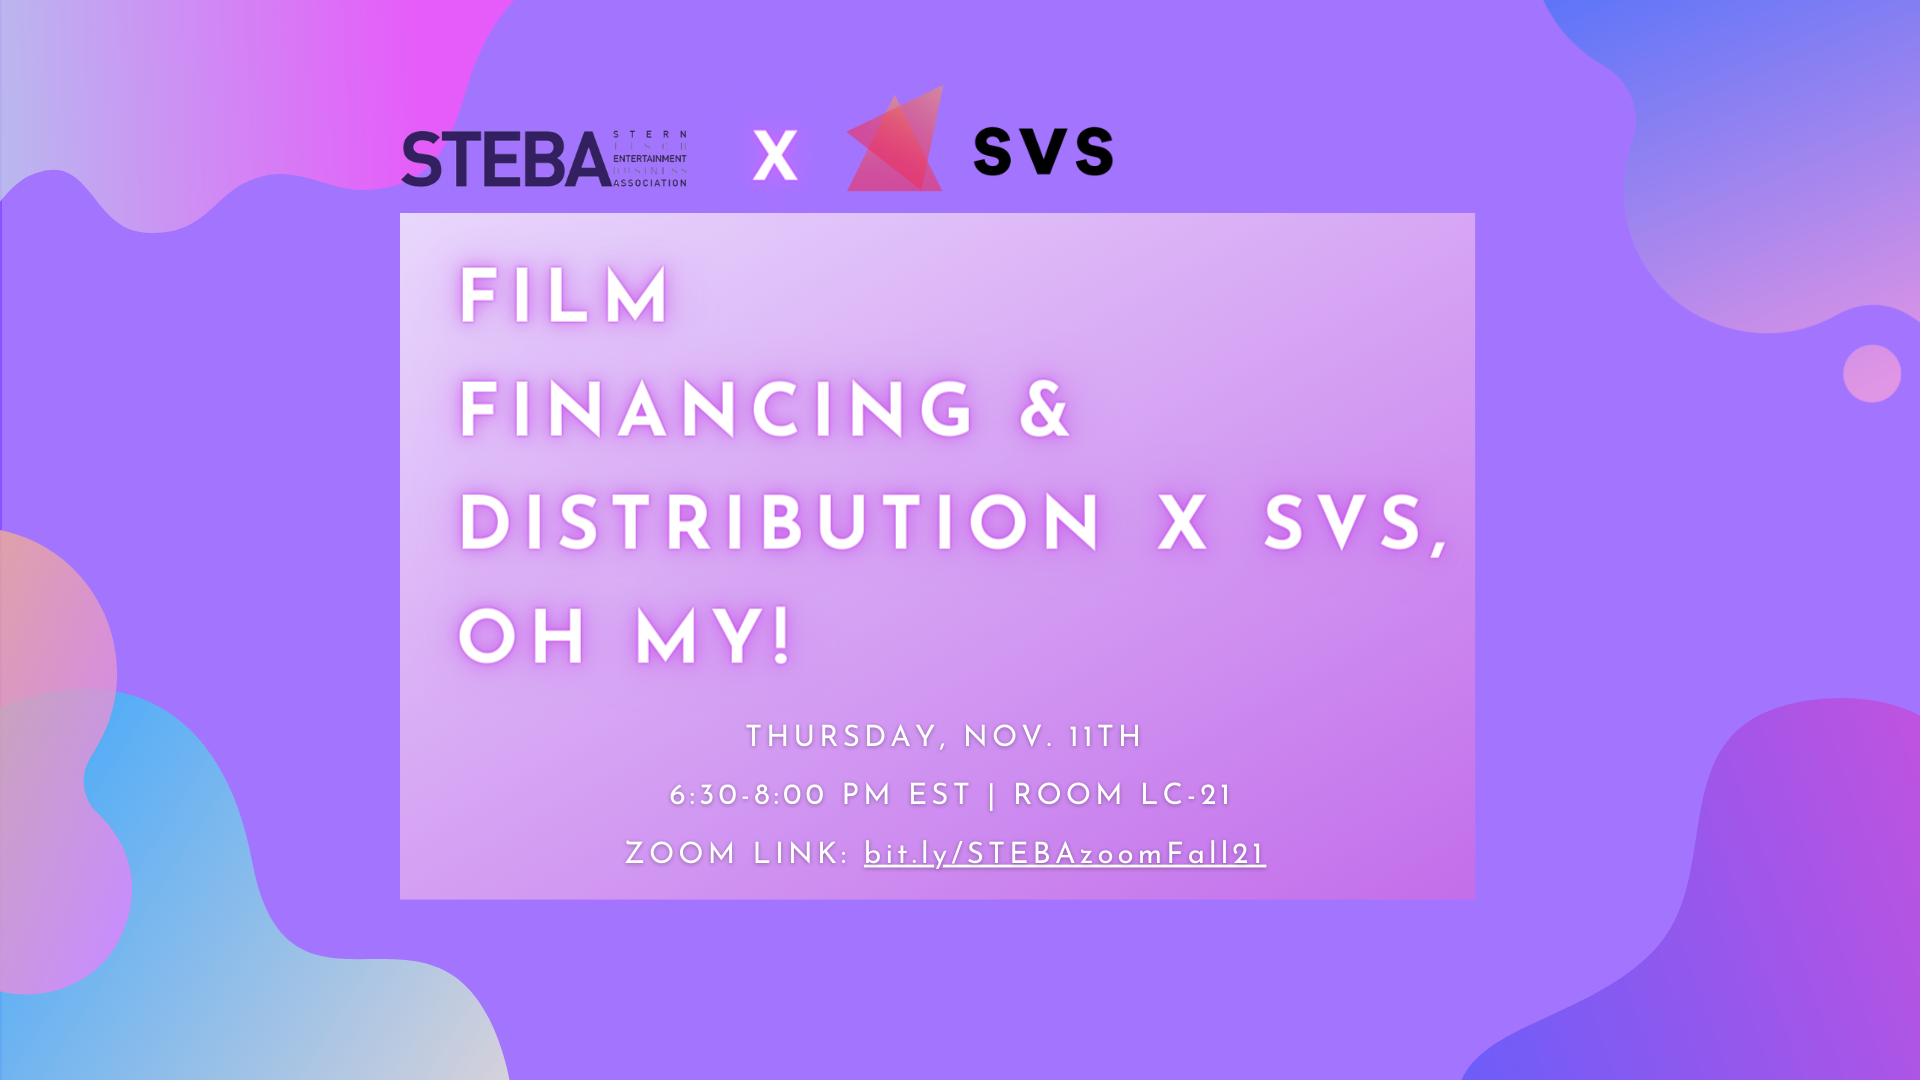 STEBA Film Financing & Distribution